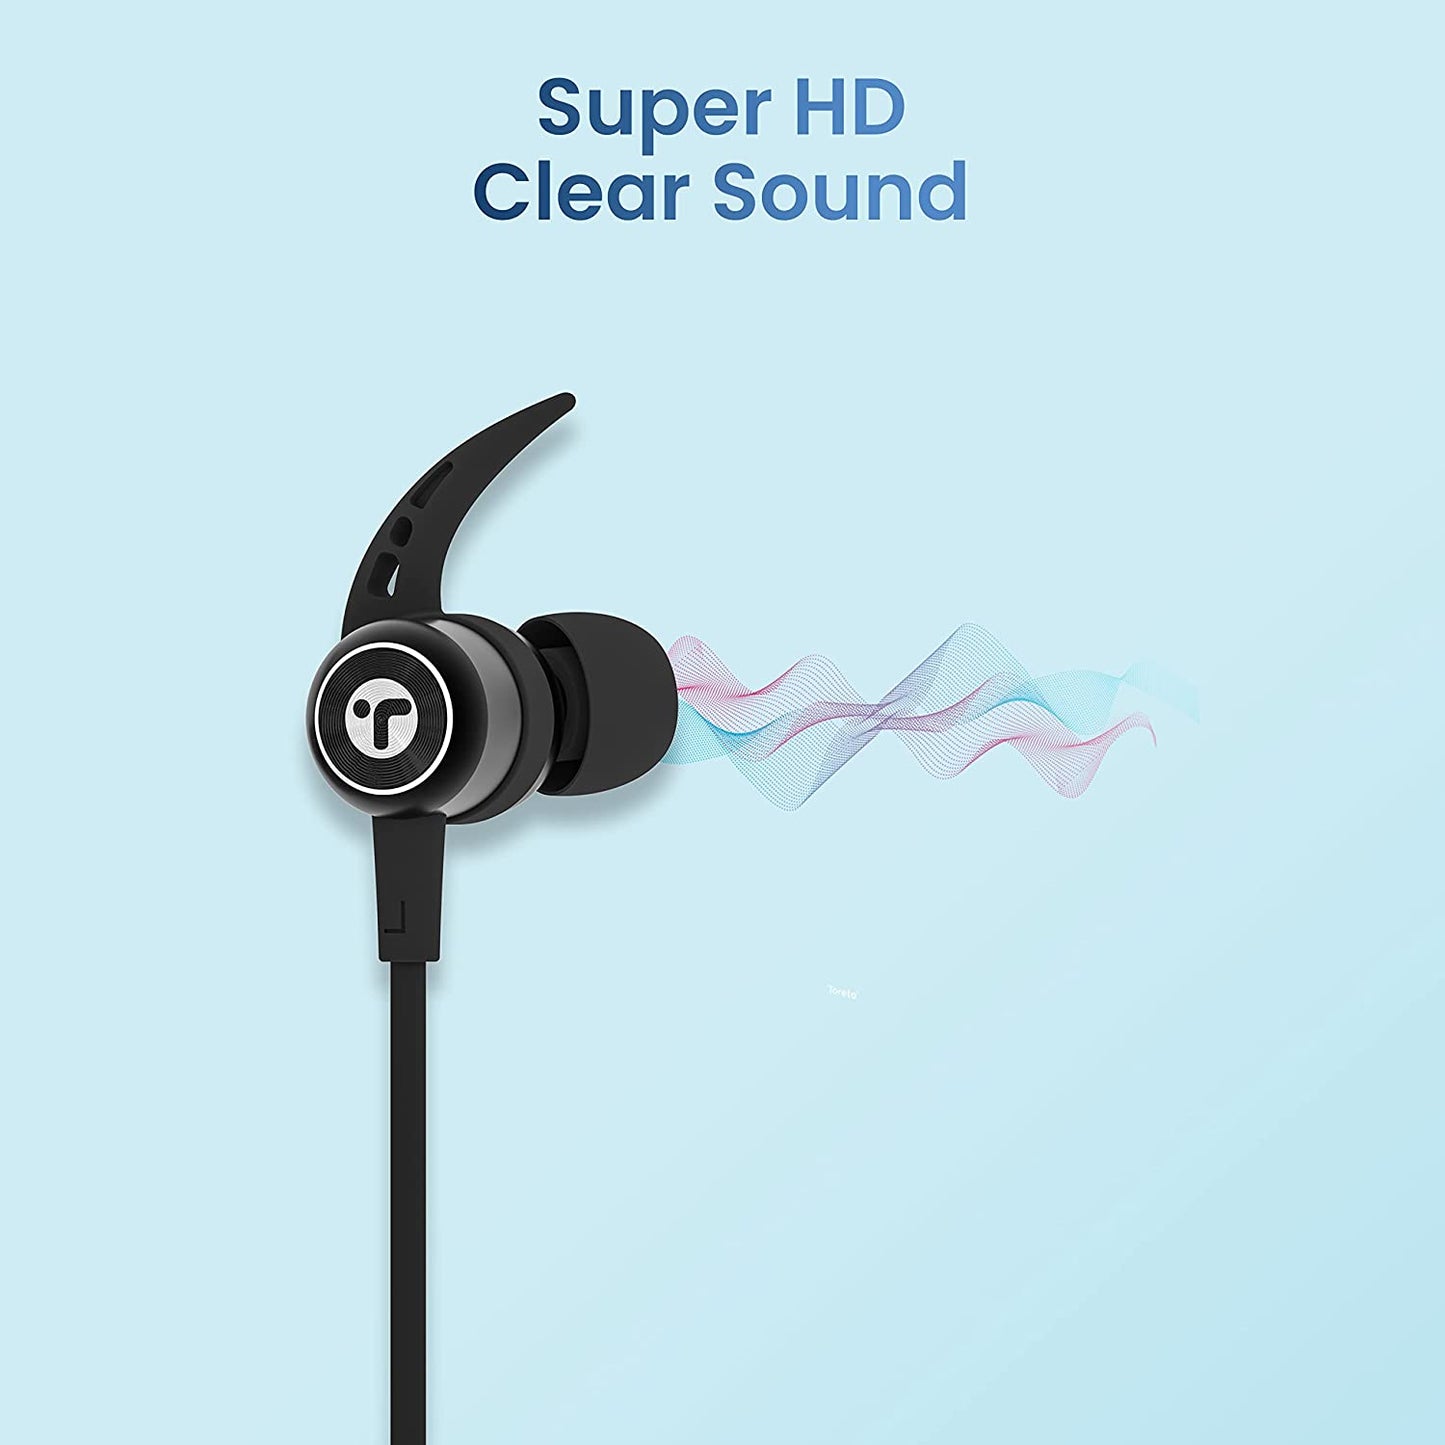 Toreto Alpha Pro  Wireless Bluetooth Neckband Headset with upto 90Hrs Playtime